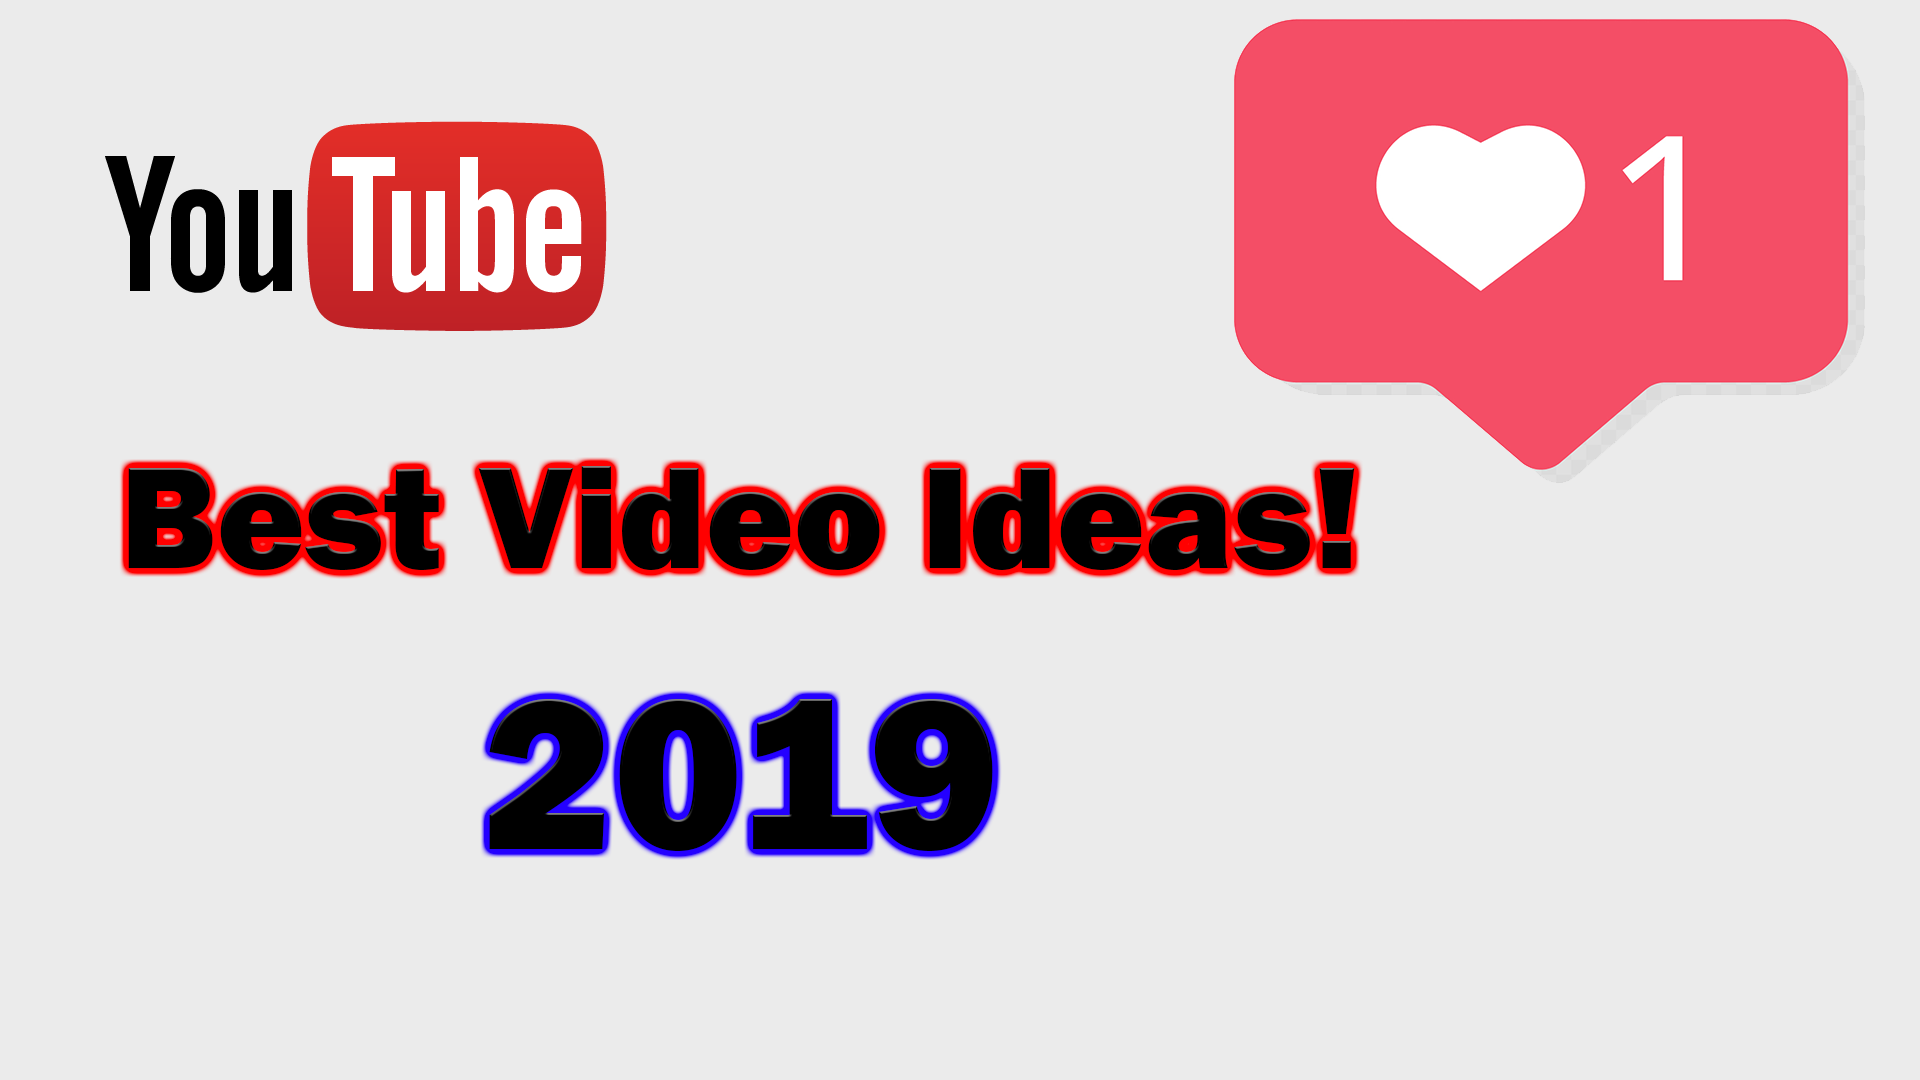 BEST VIDEO IDEAS 2019